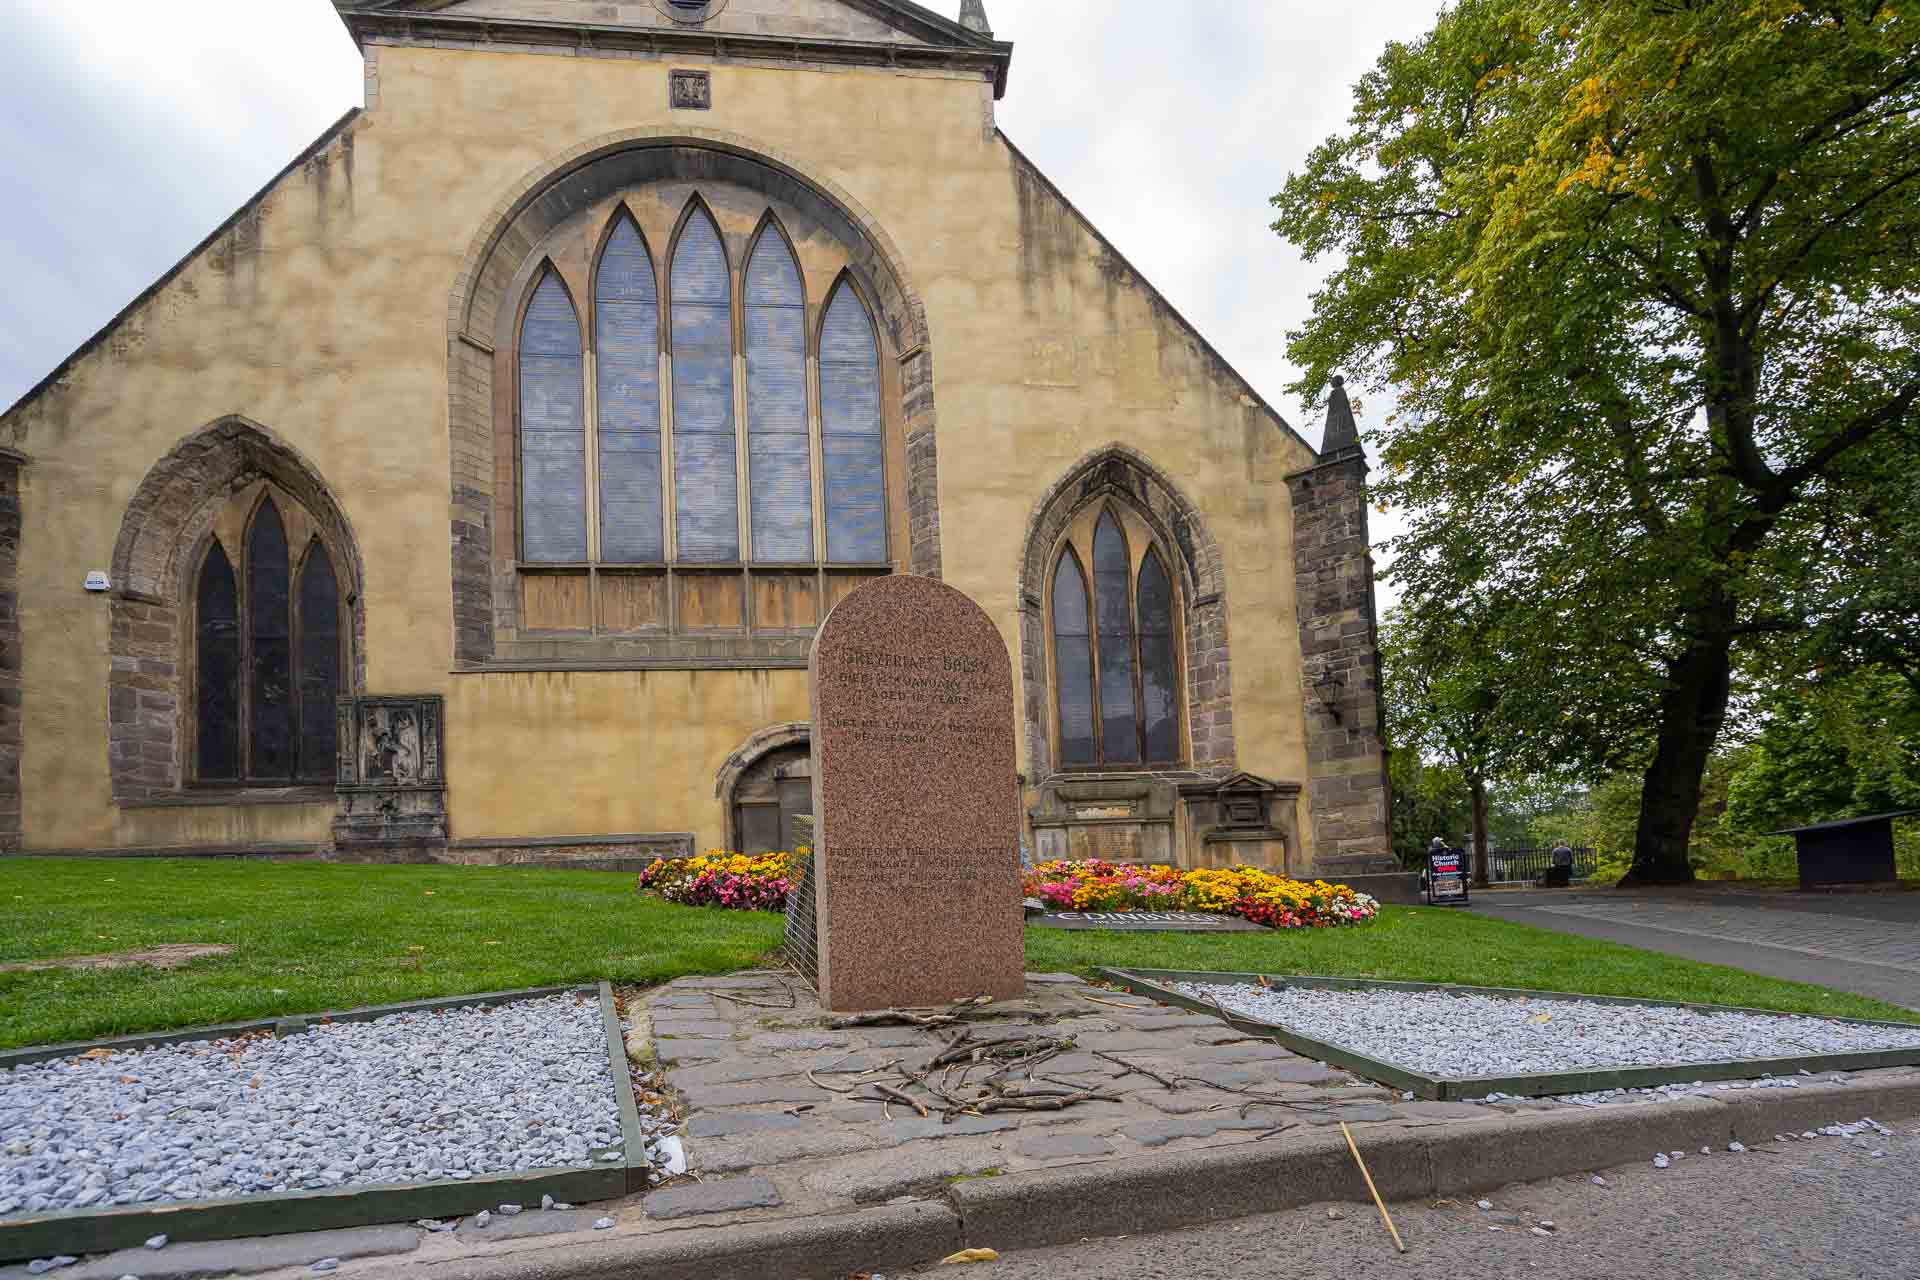 The entrance of Greyfriars cemetery in Edinburgh